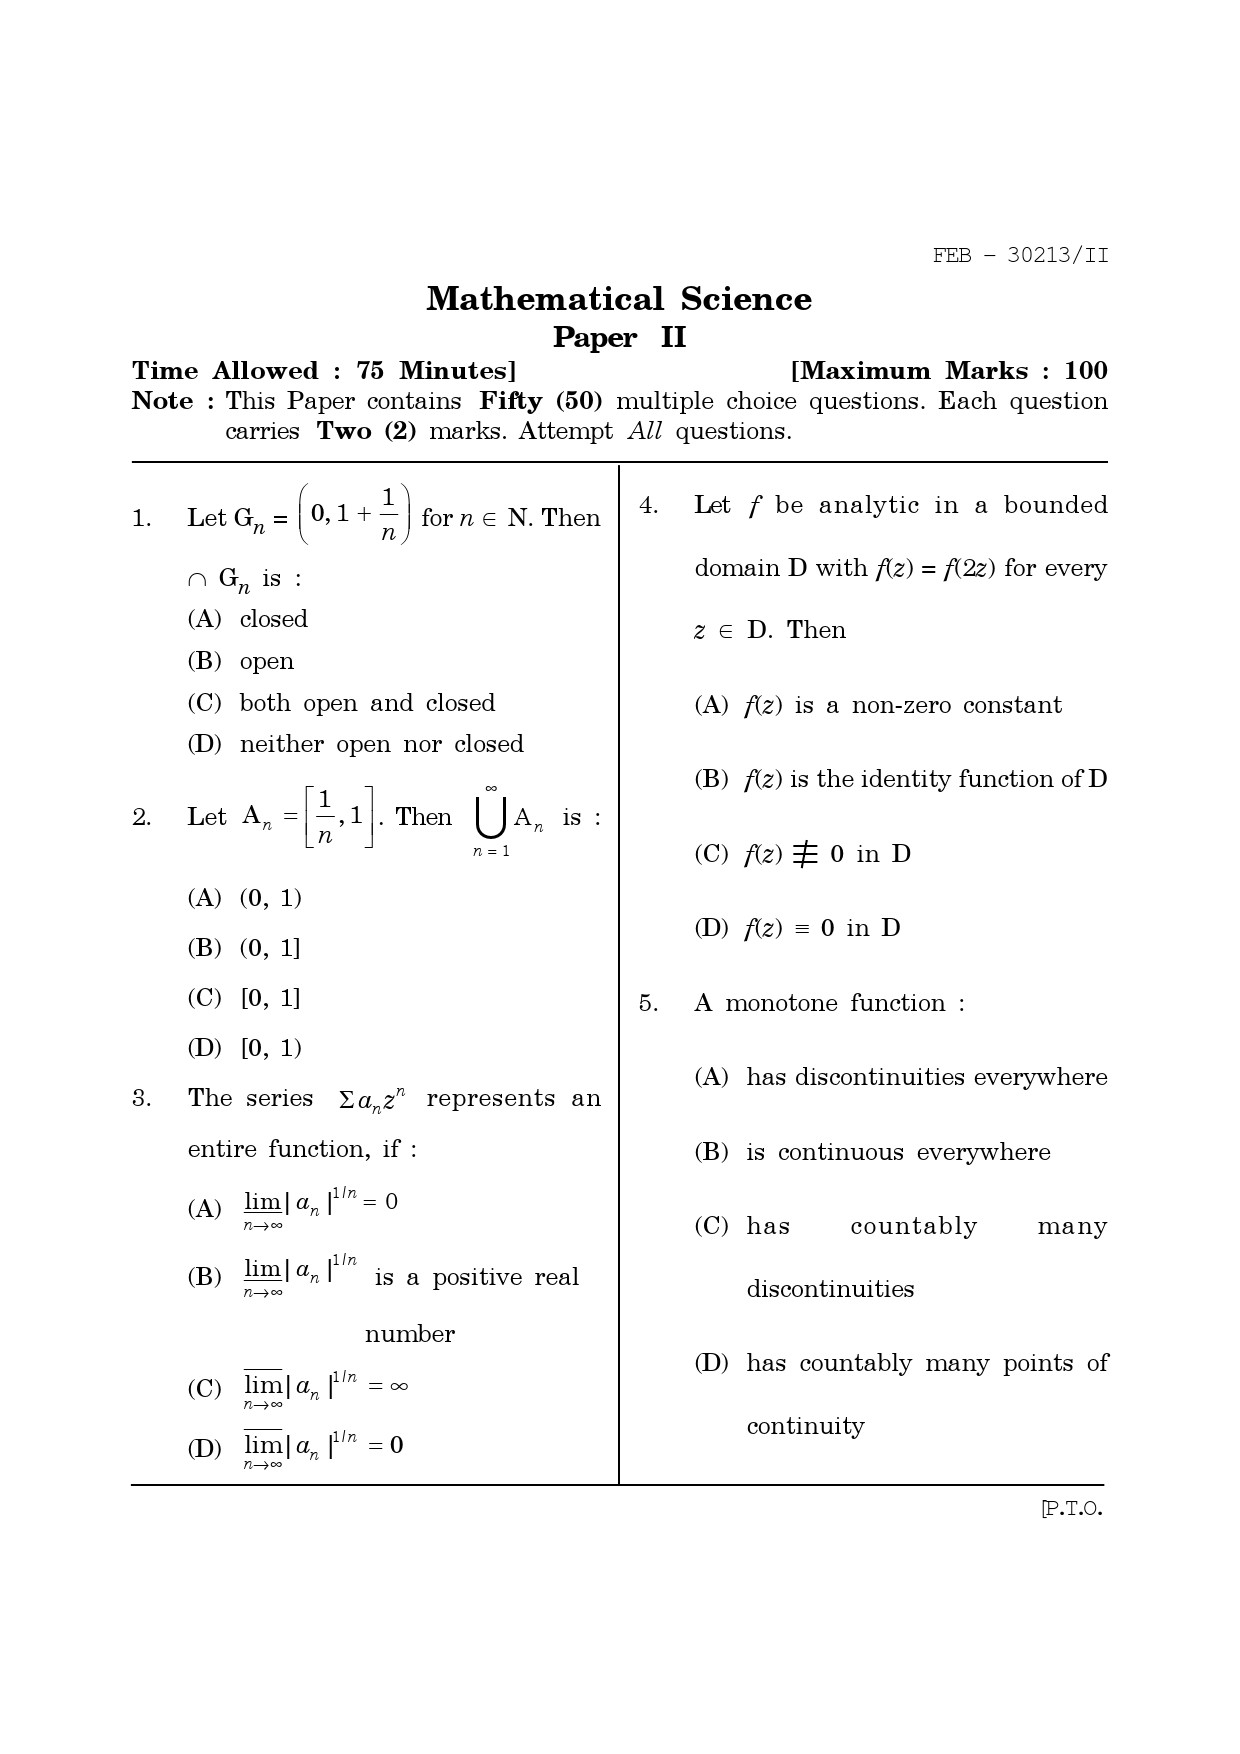 Maharashtra SET Mathematical Sciences Question Paper II February 2013 1